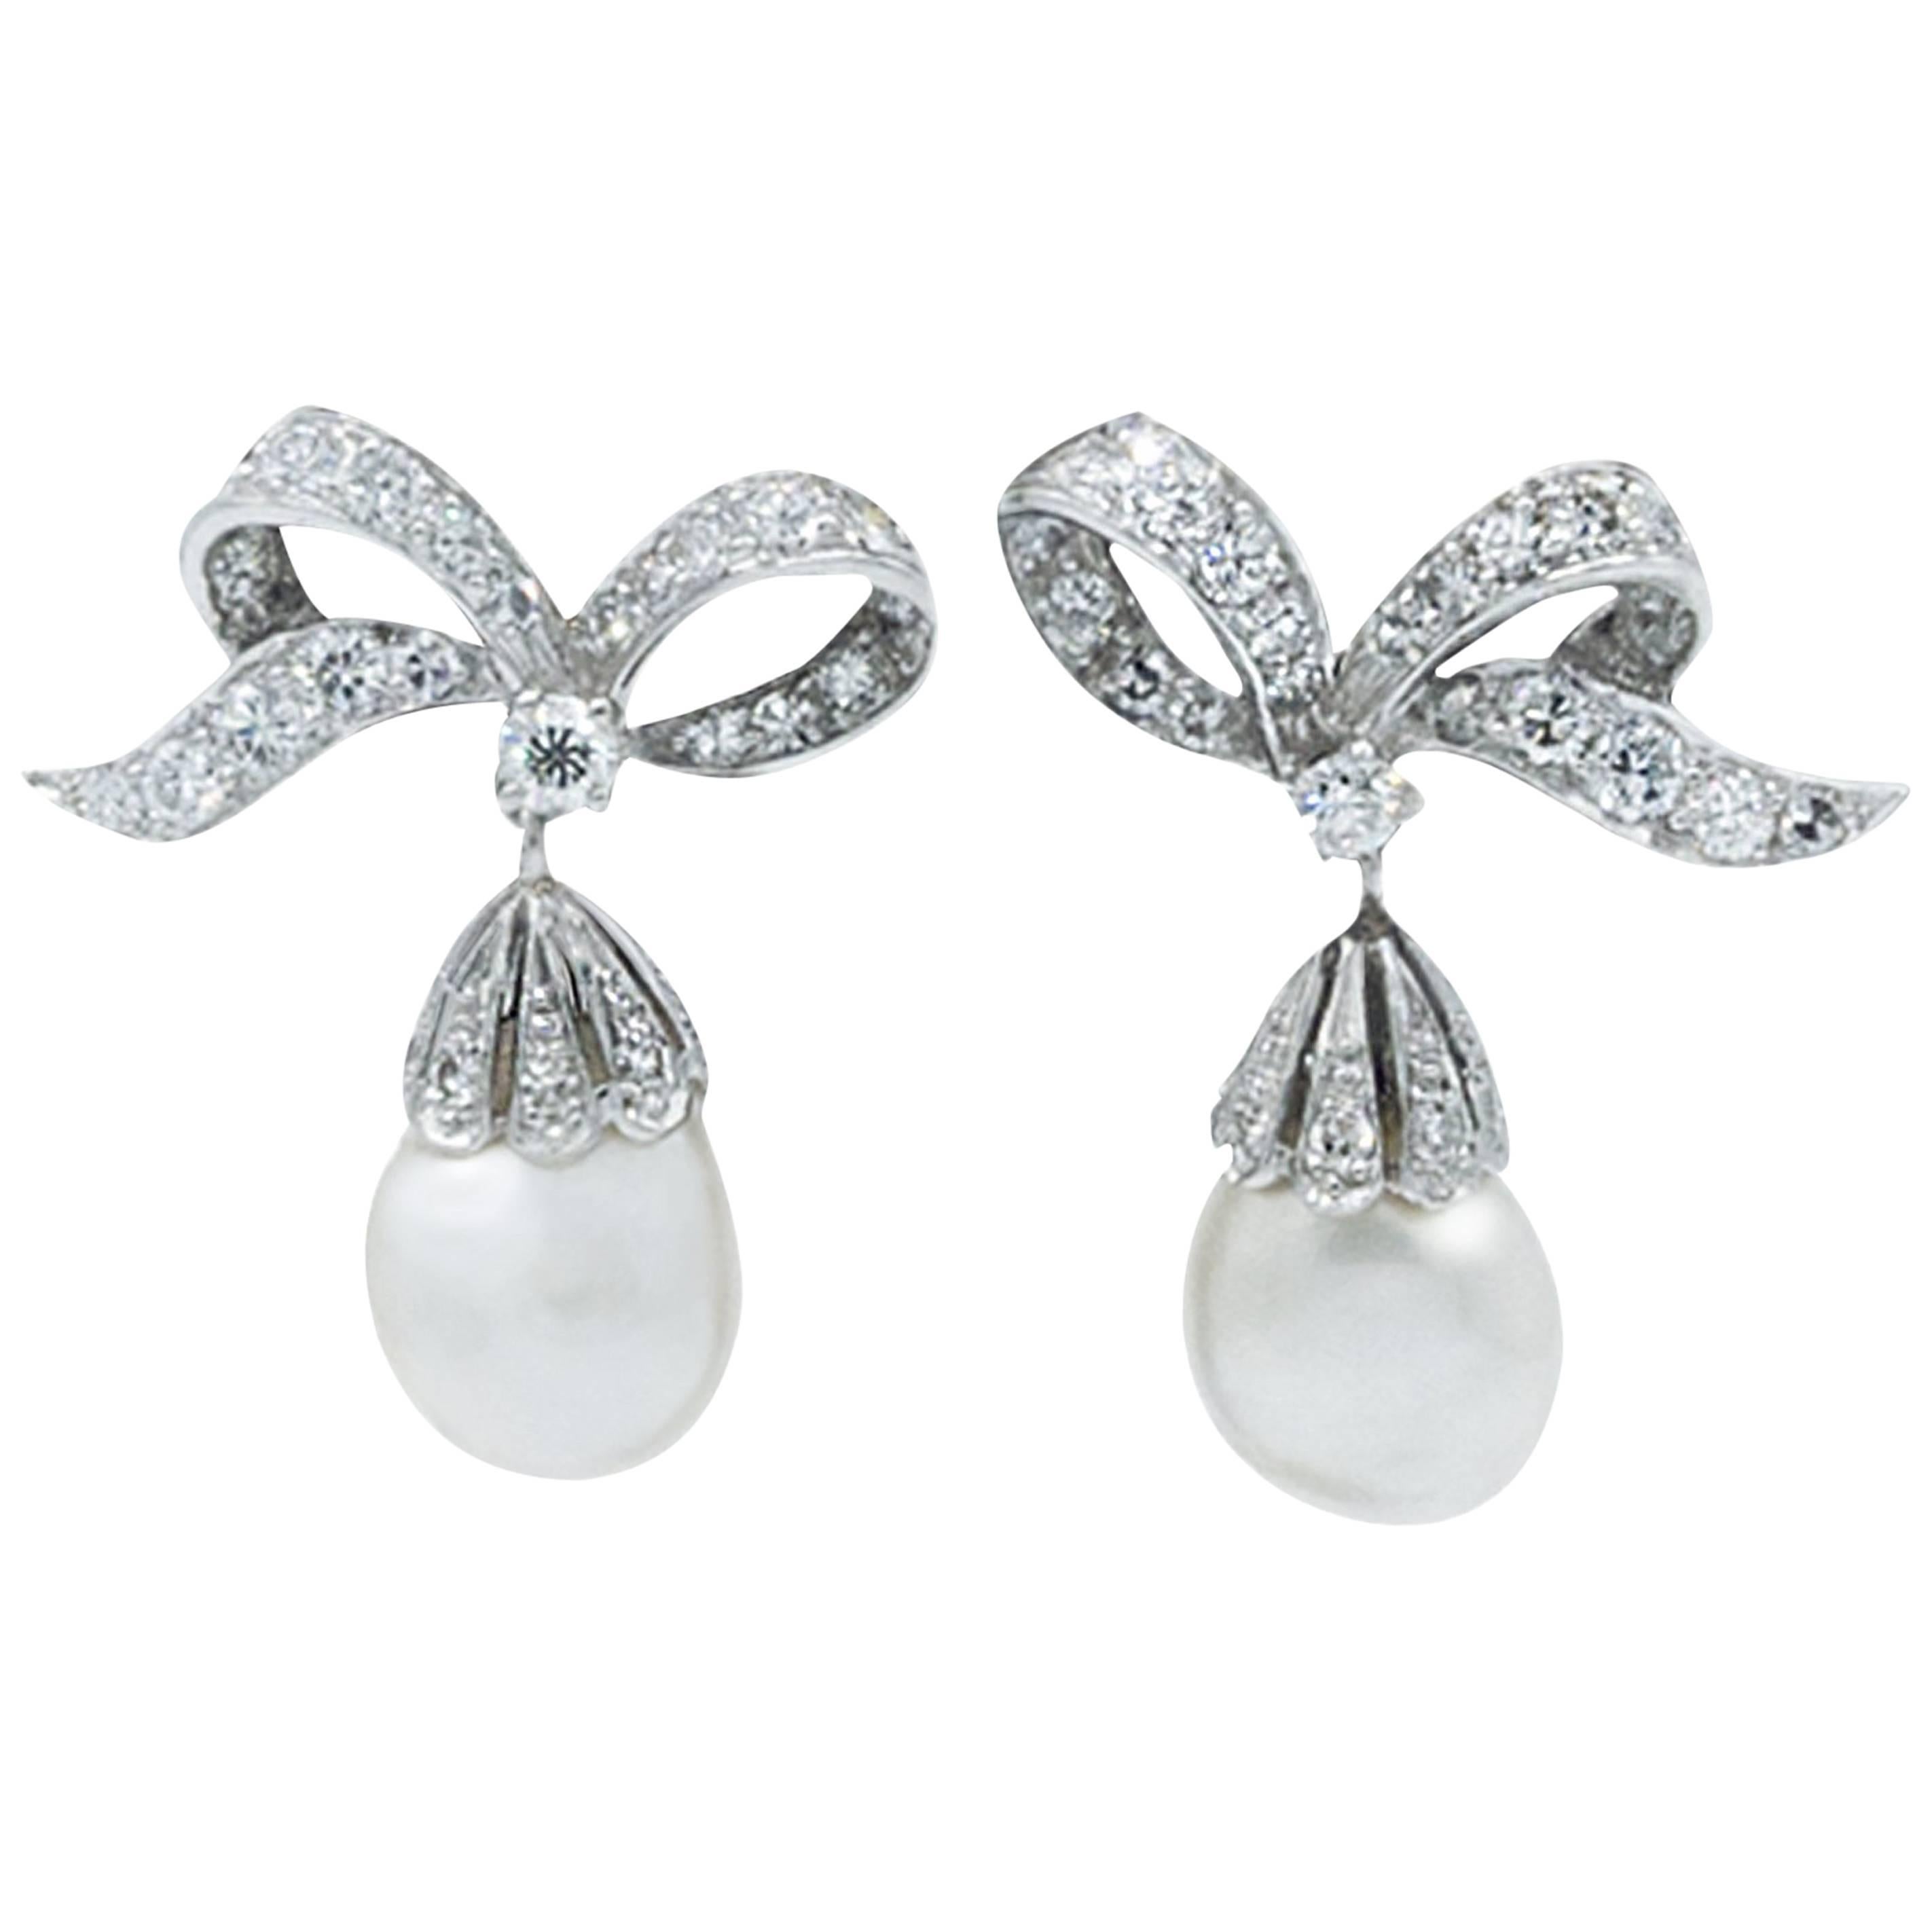 Pearls and Diamonds Earrings